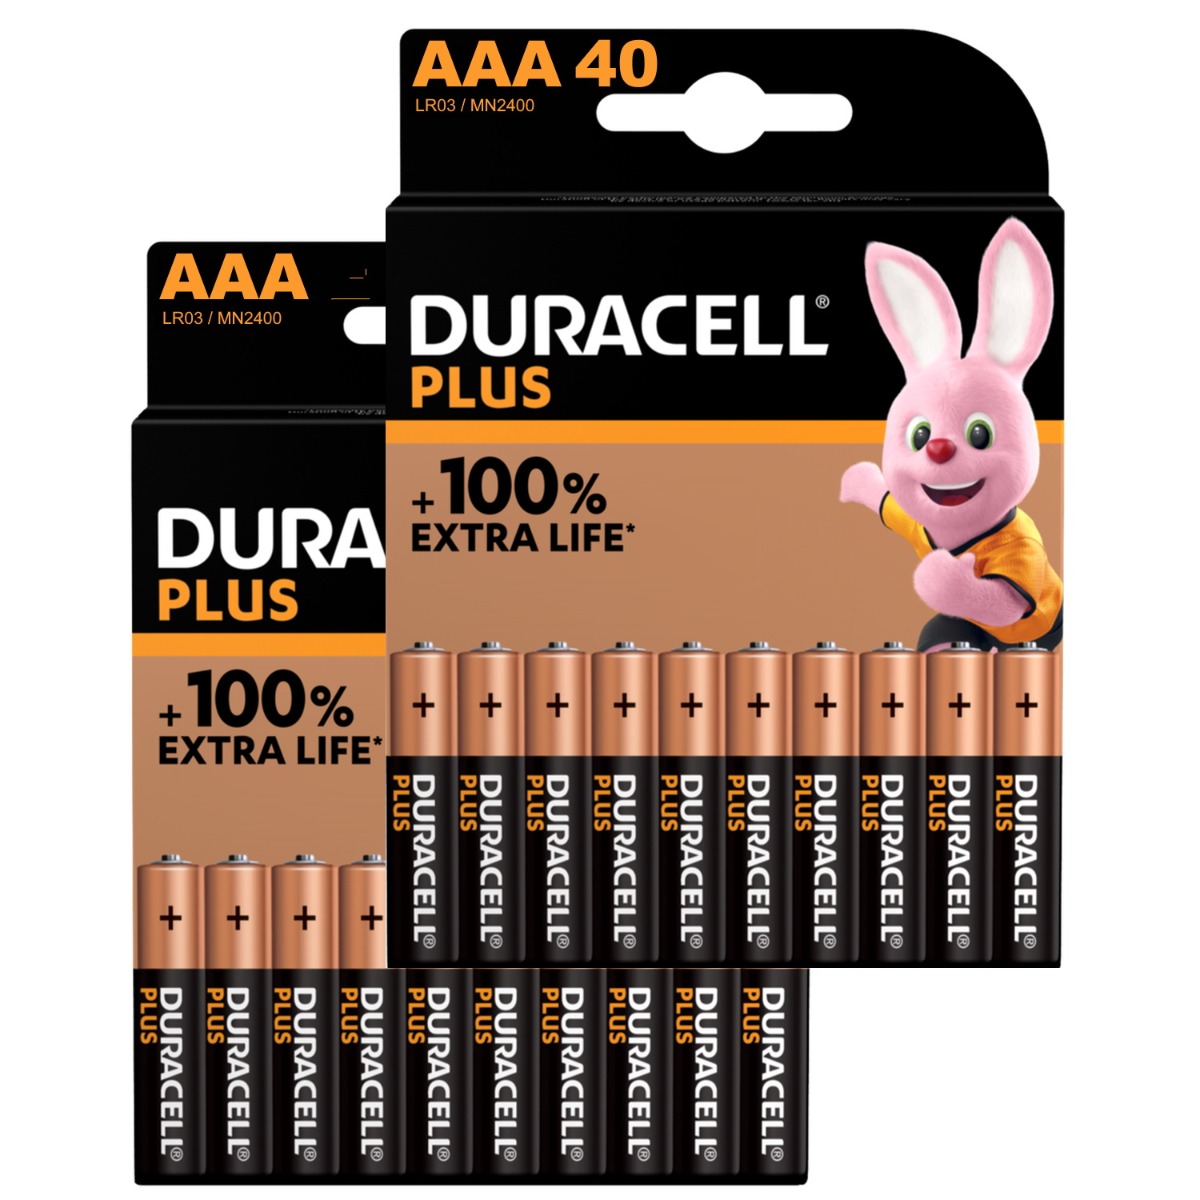 karton Lull Spild Duracell Plus AAA Batteries Box of 40 Bulk Pack Alkaline Size MN2400 LR03  Box Tub Duralock